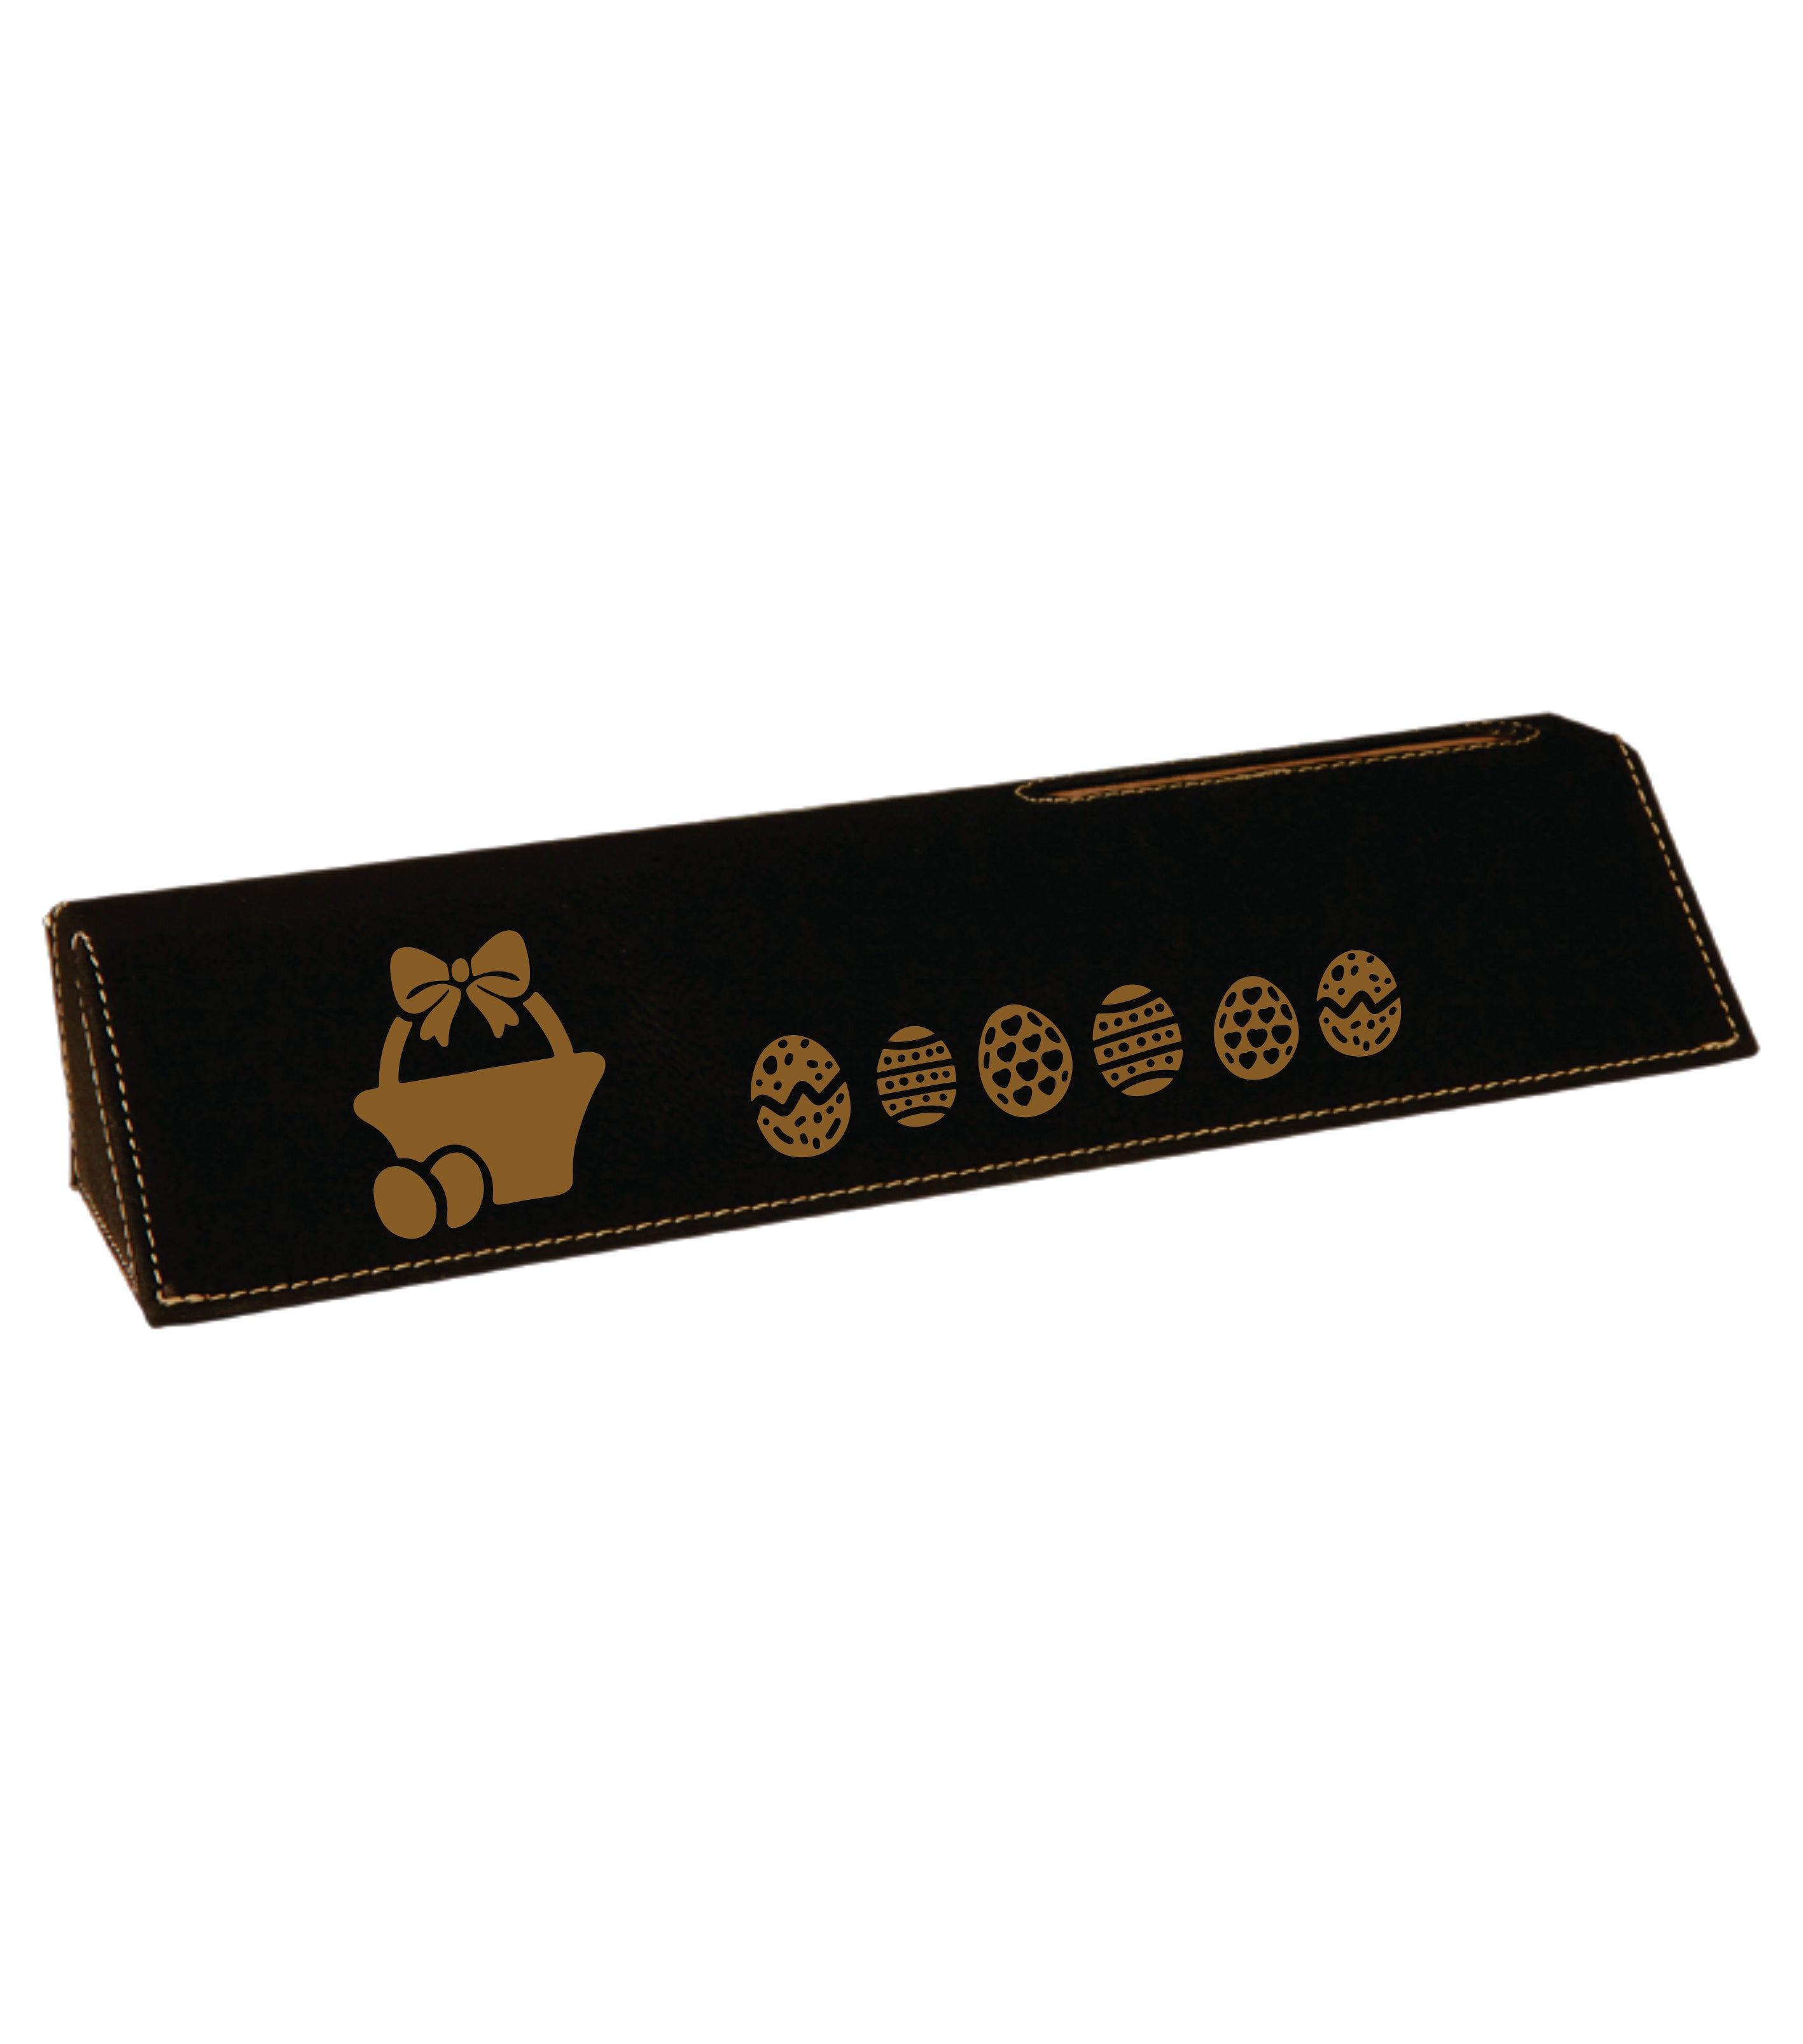 10 1/2" Black/Gold Laserable Leatherette Desk Wedge with Business Card Holder